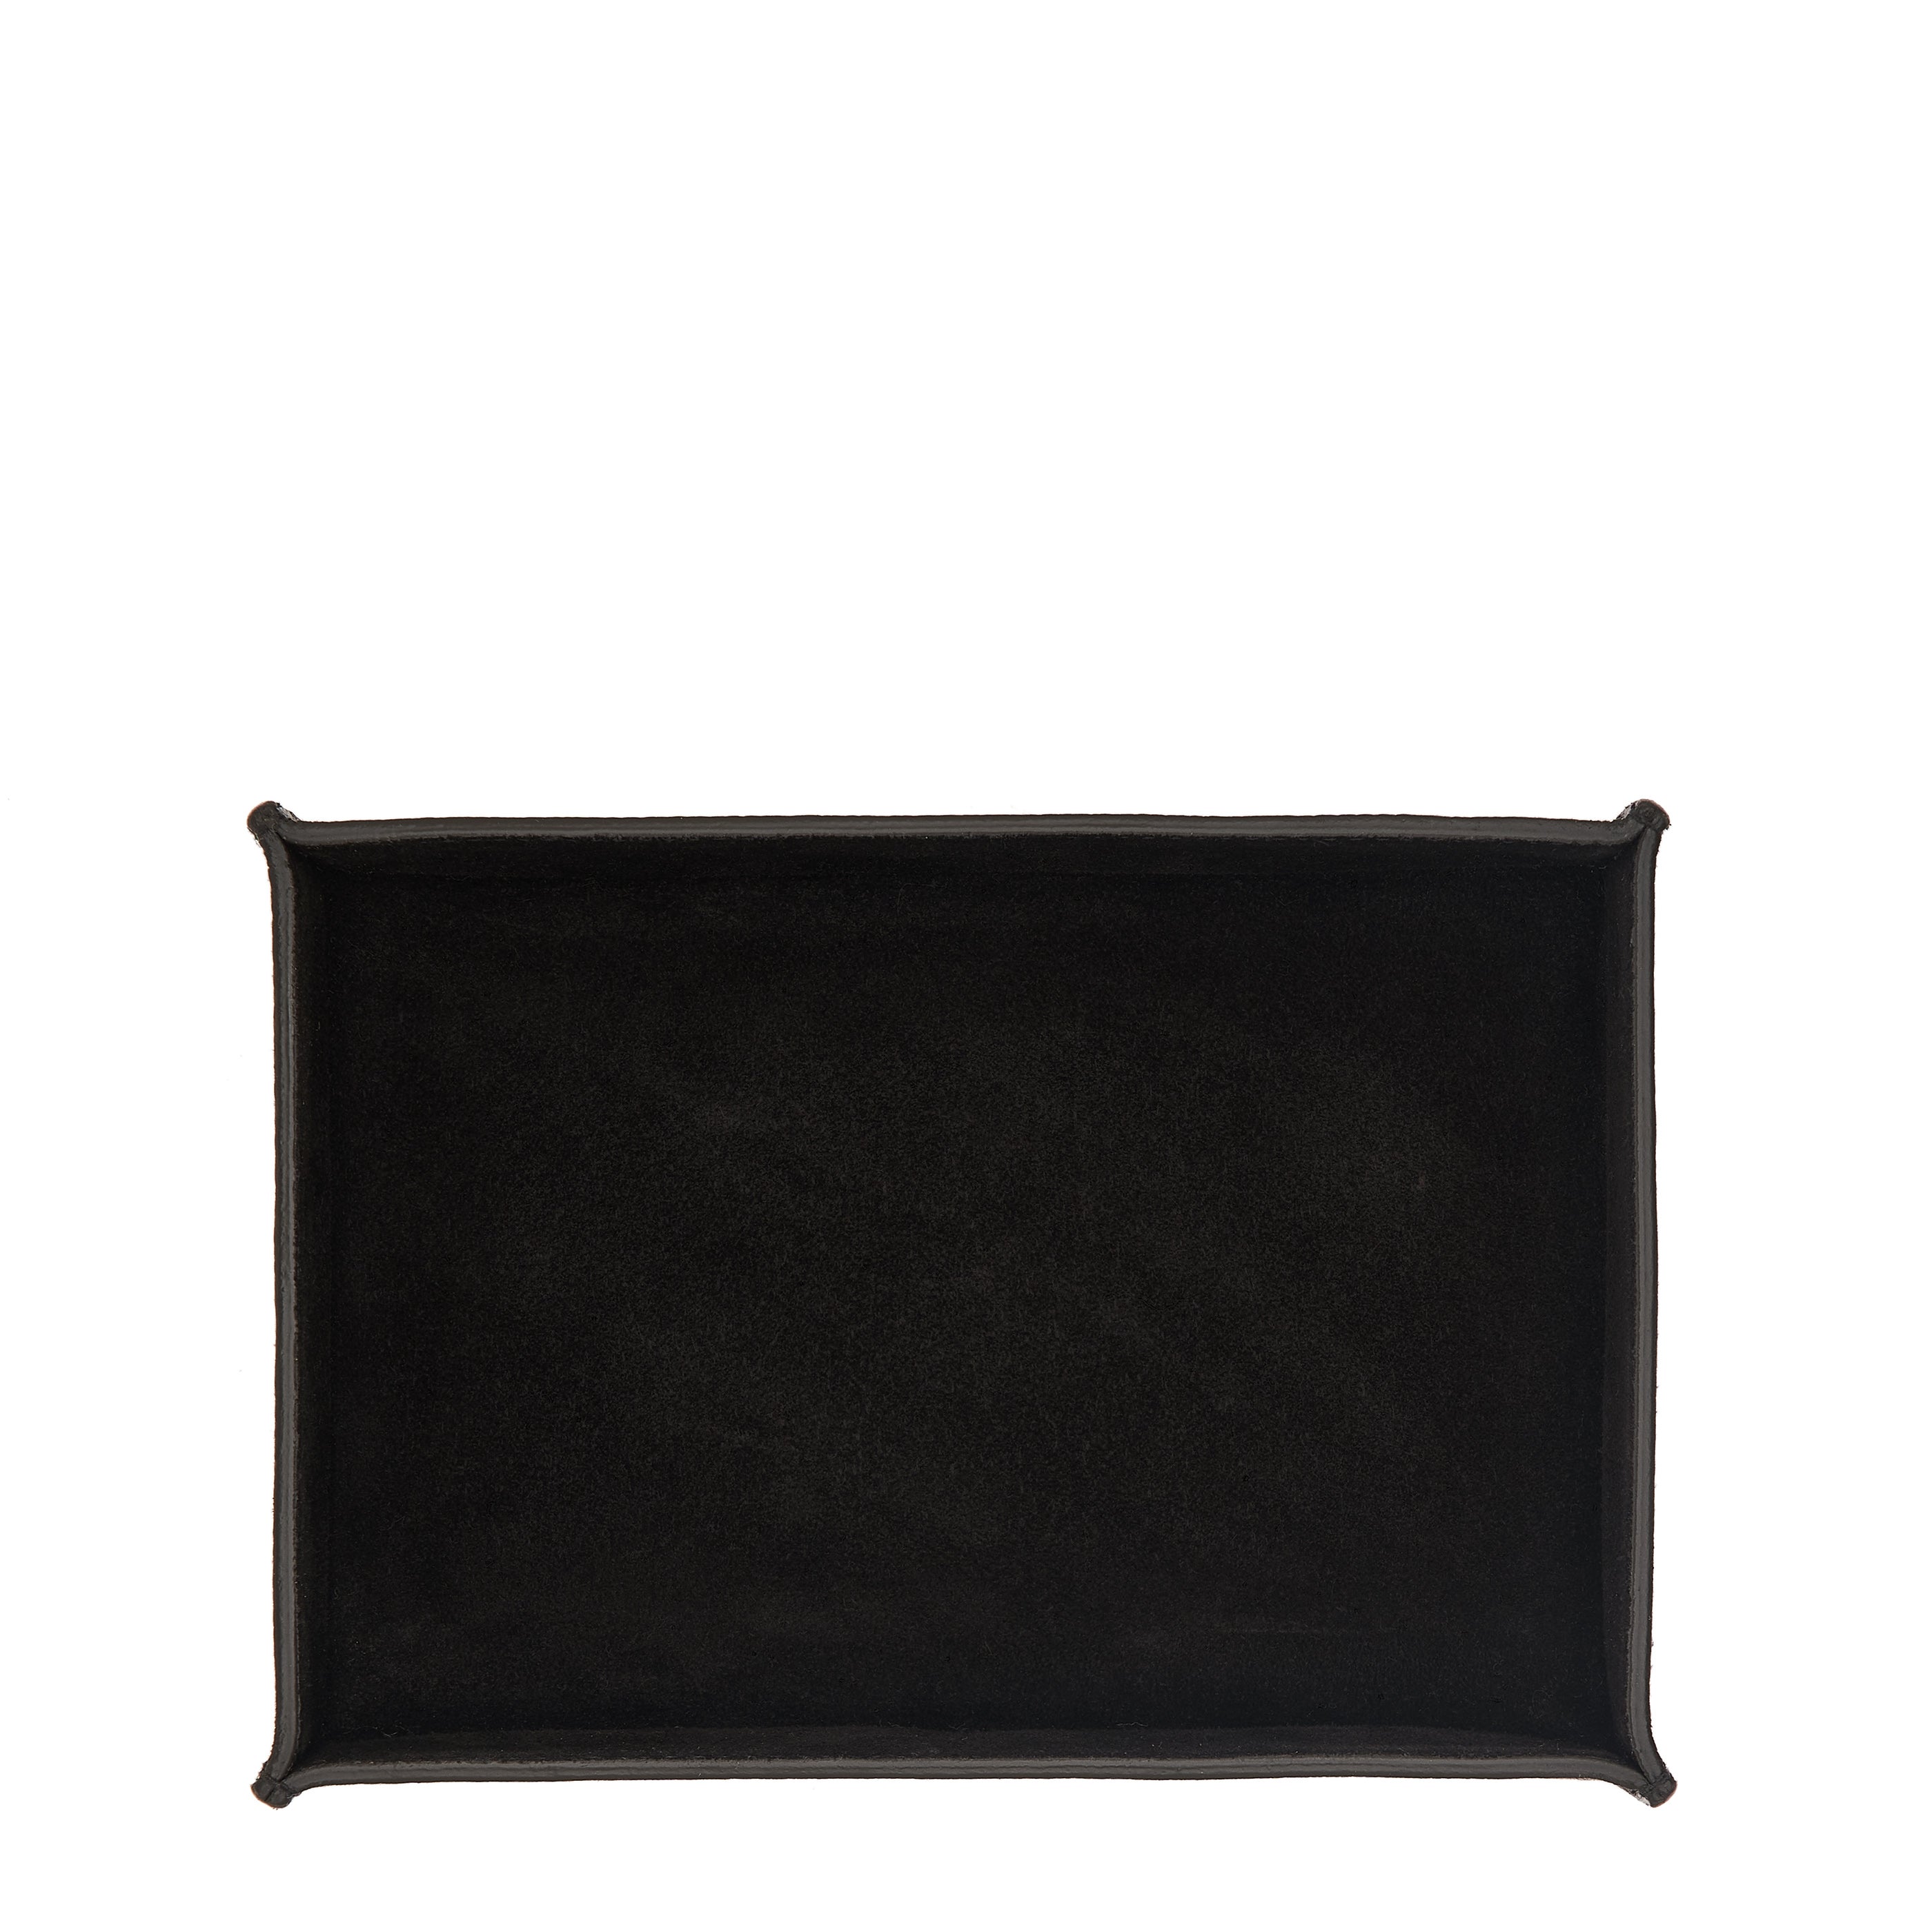 Home | Desk accessory in leather color black